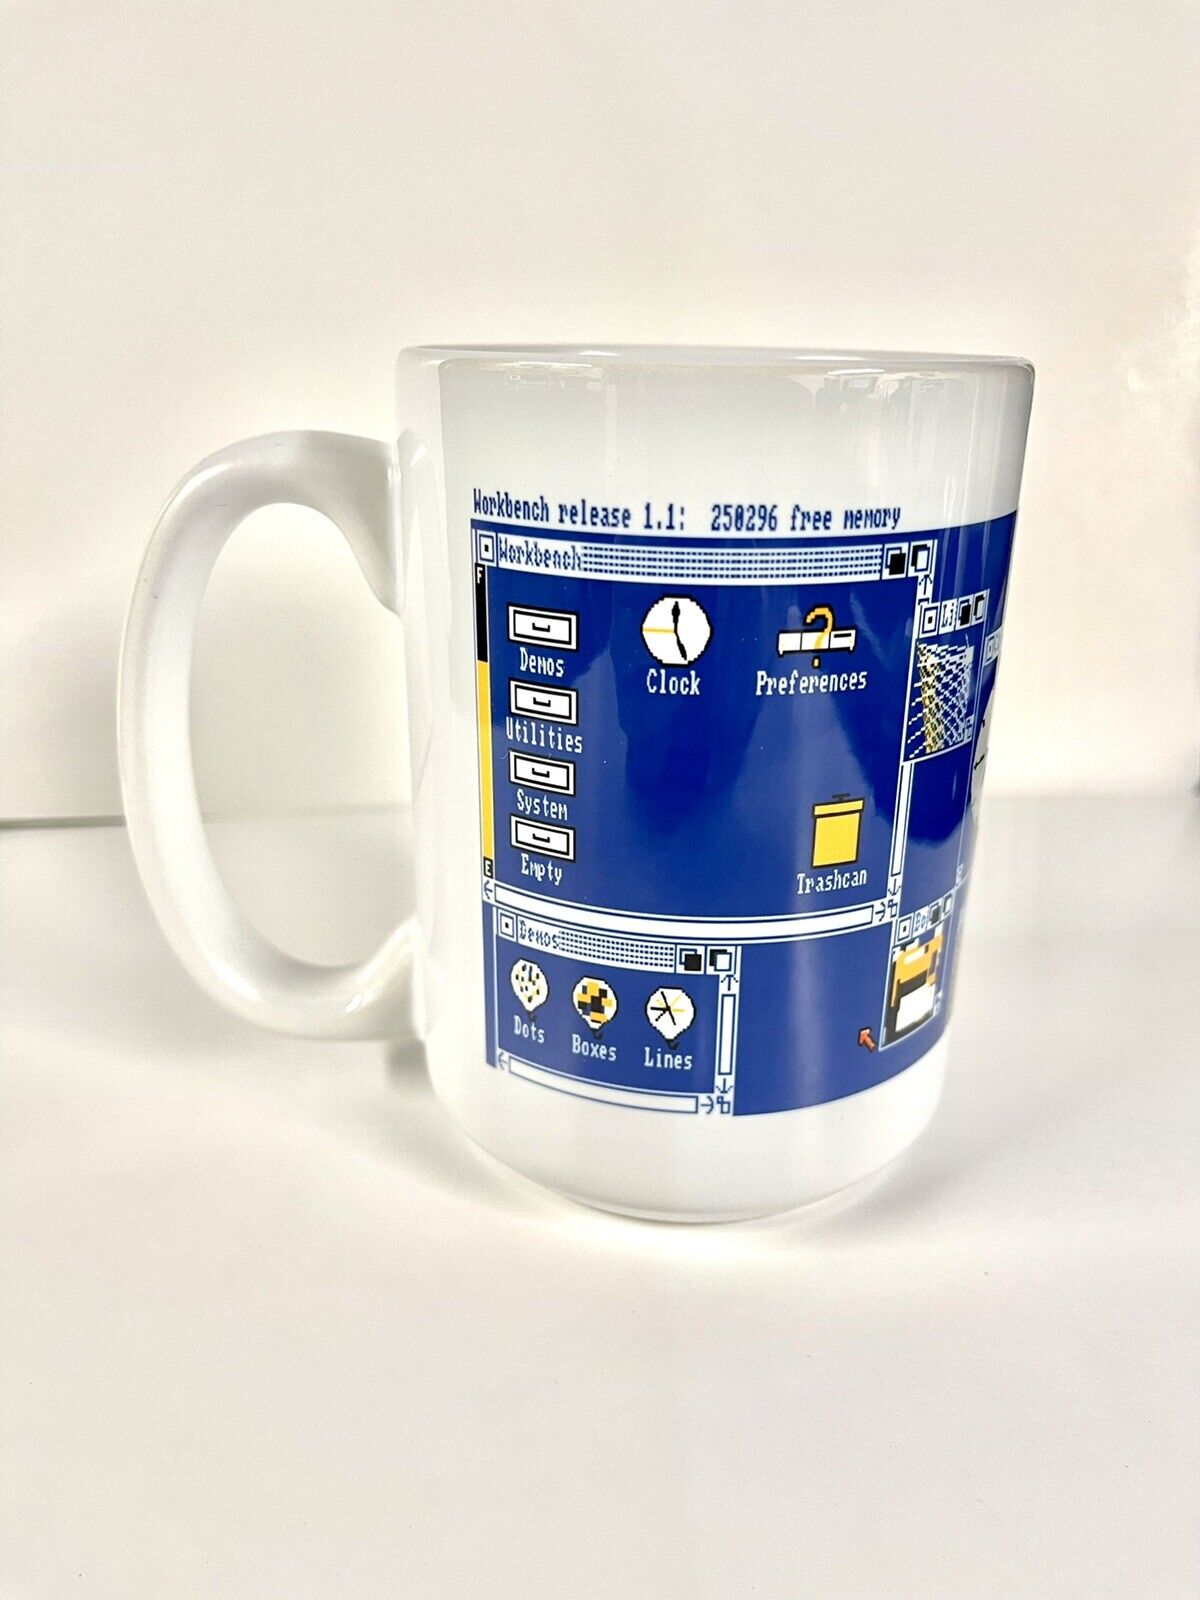 Commodore Amiga Workbench Mug - 15 Oz Coffee Mug - Amiga 1000